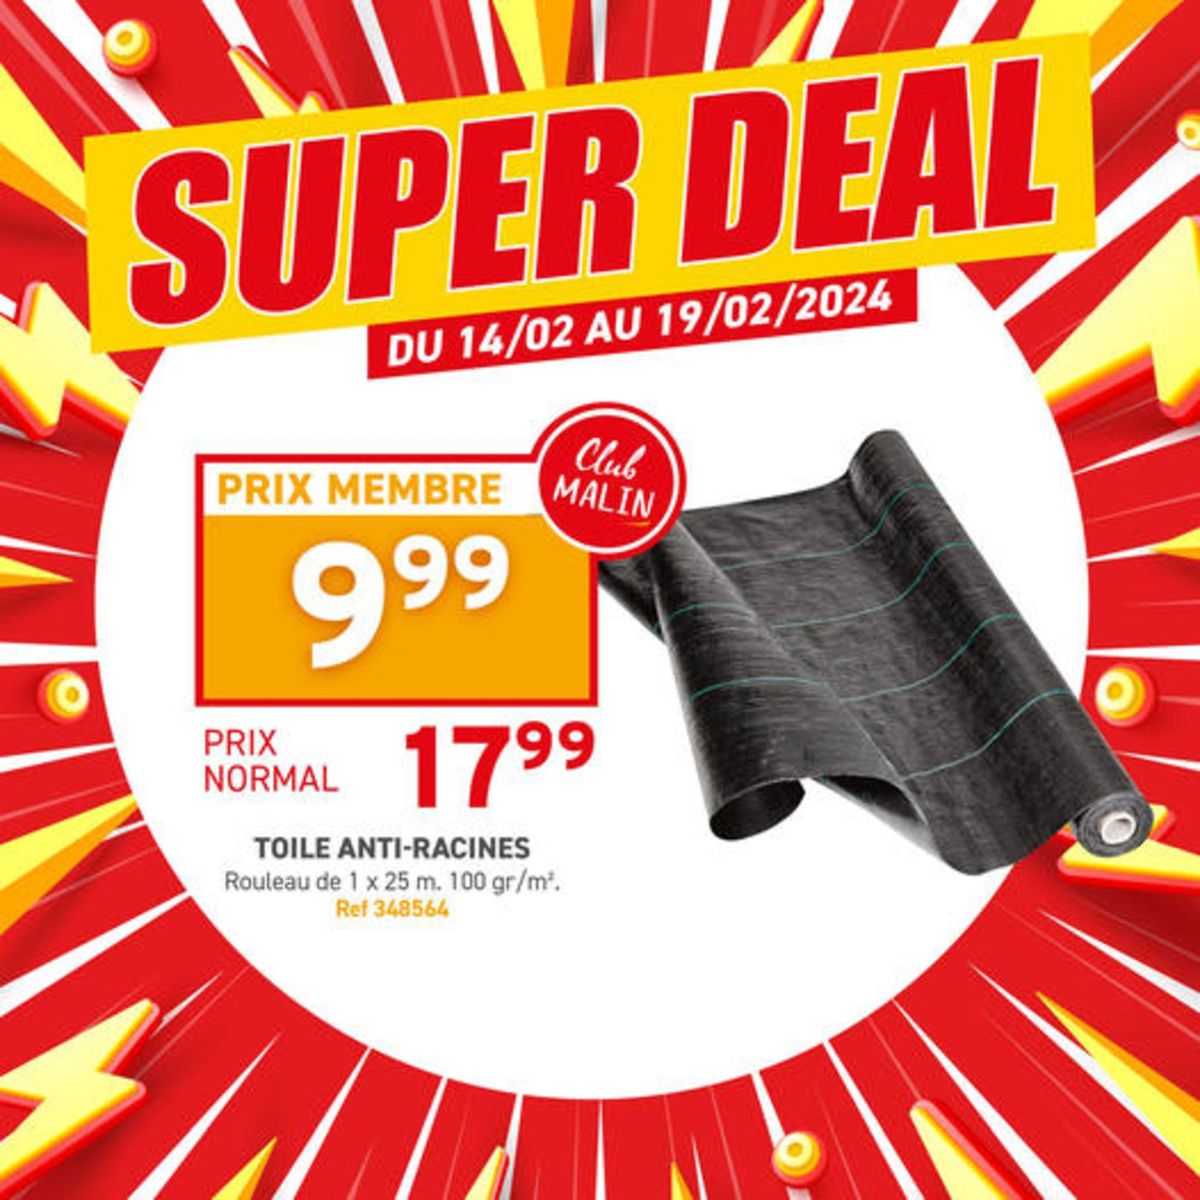 Catalogue Super deal, page 00003